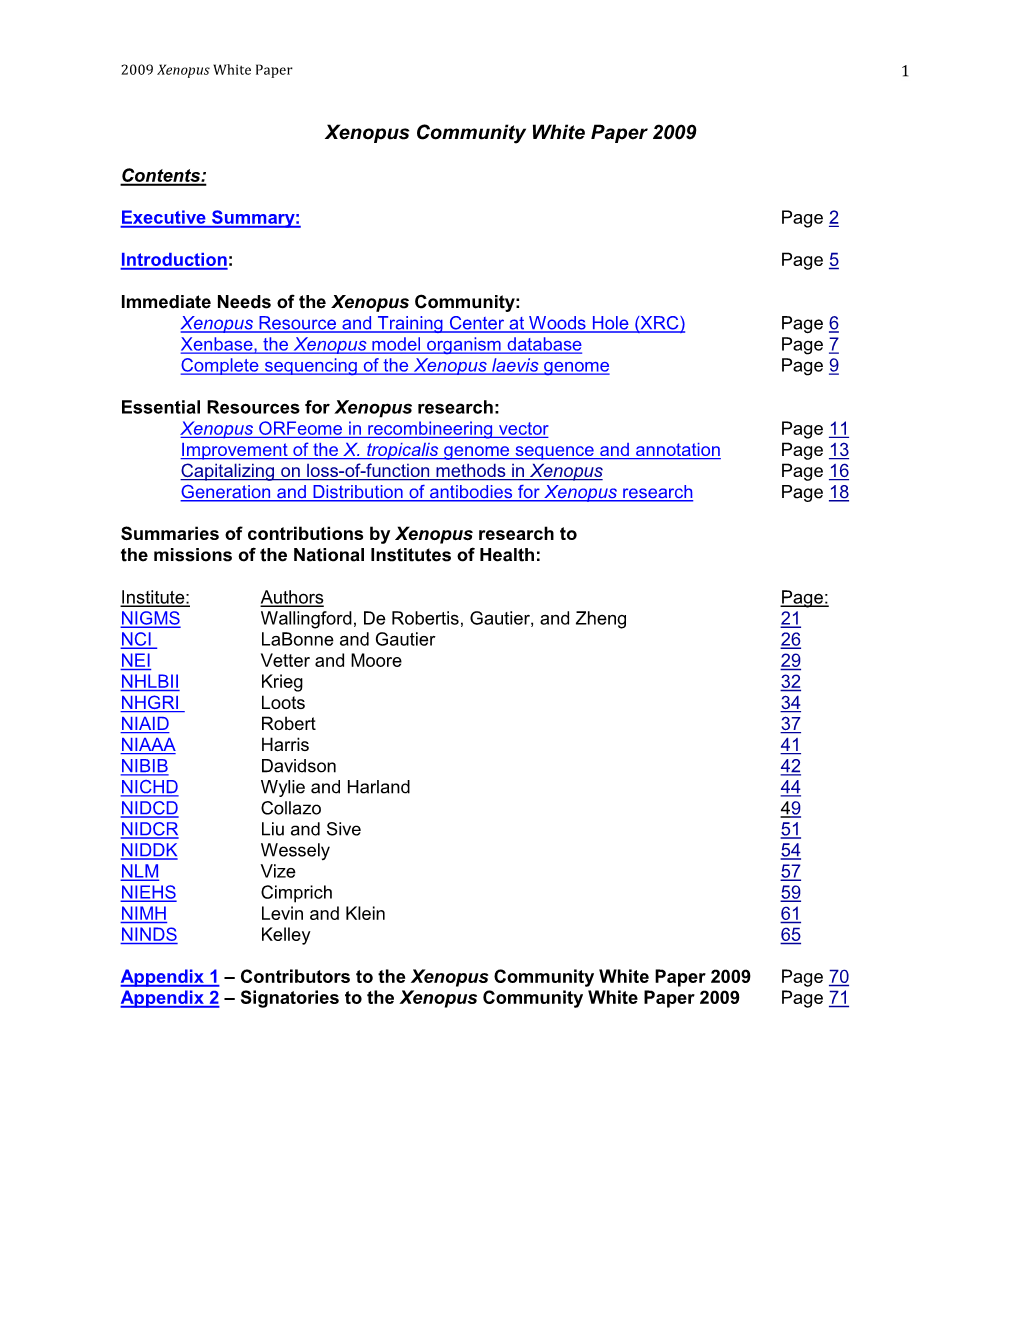 Xenopus Community White Paper 2009